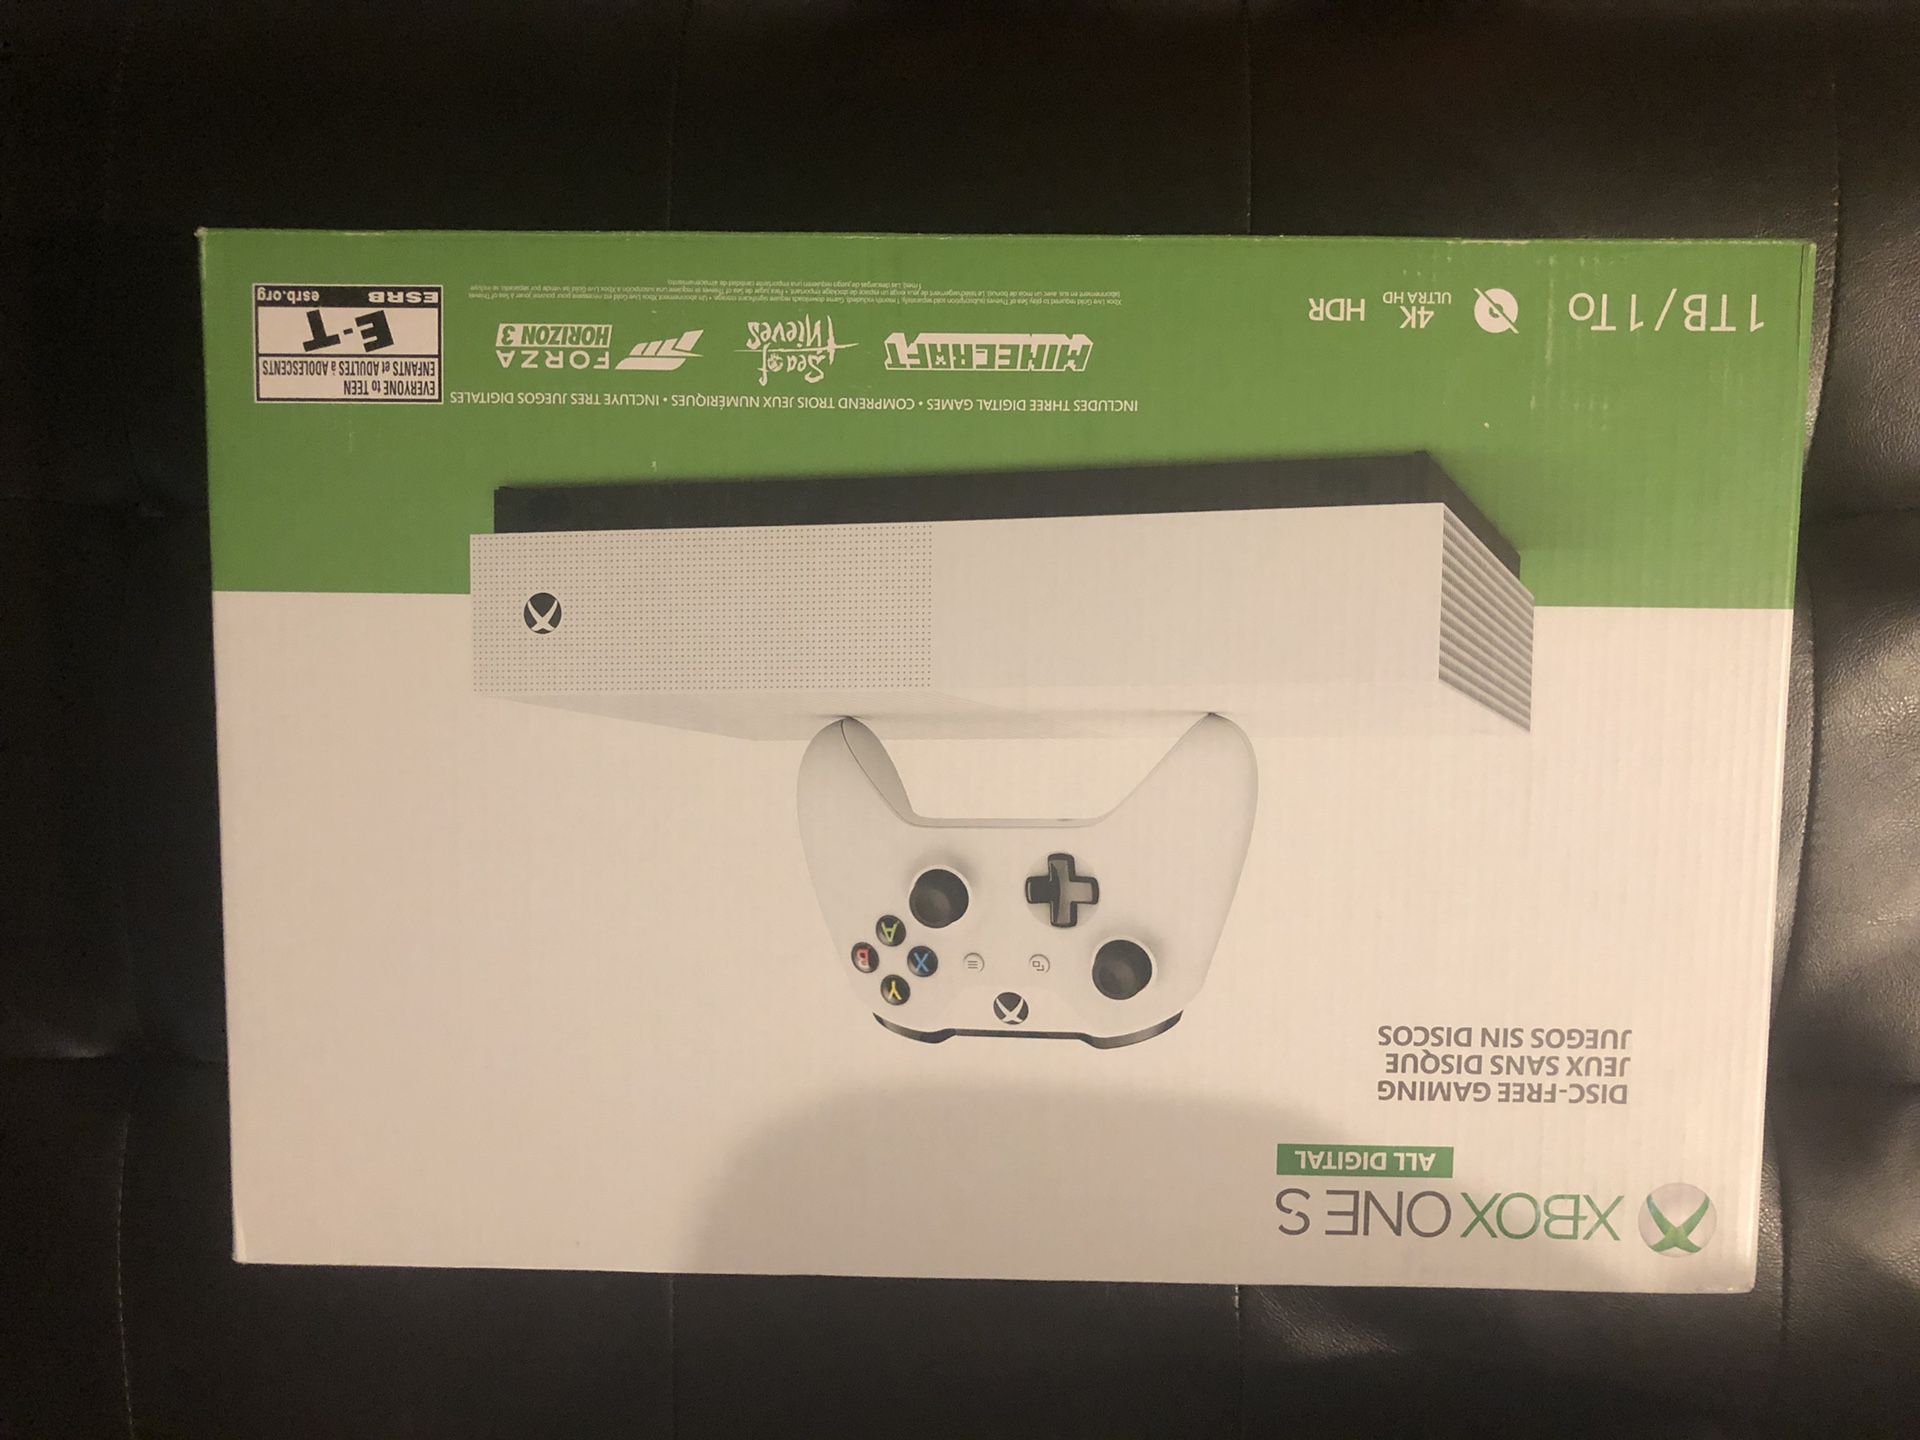 Brand new Xbox one S all digital